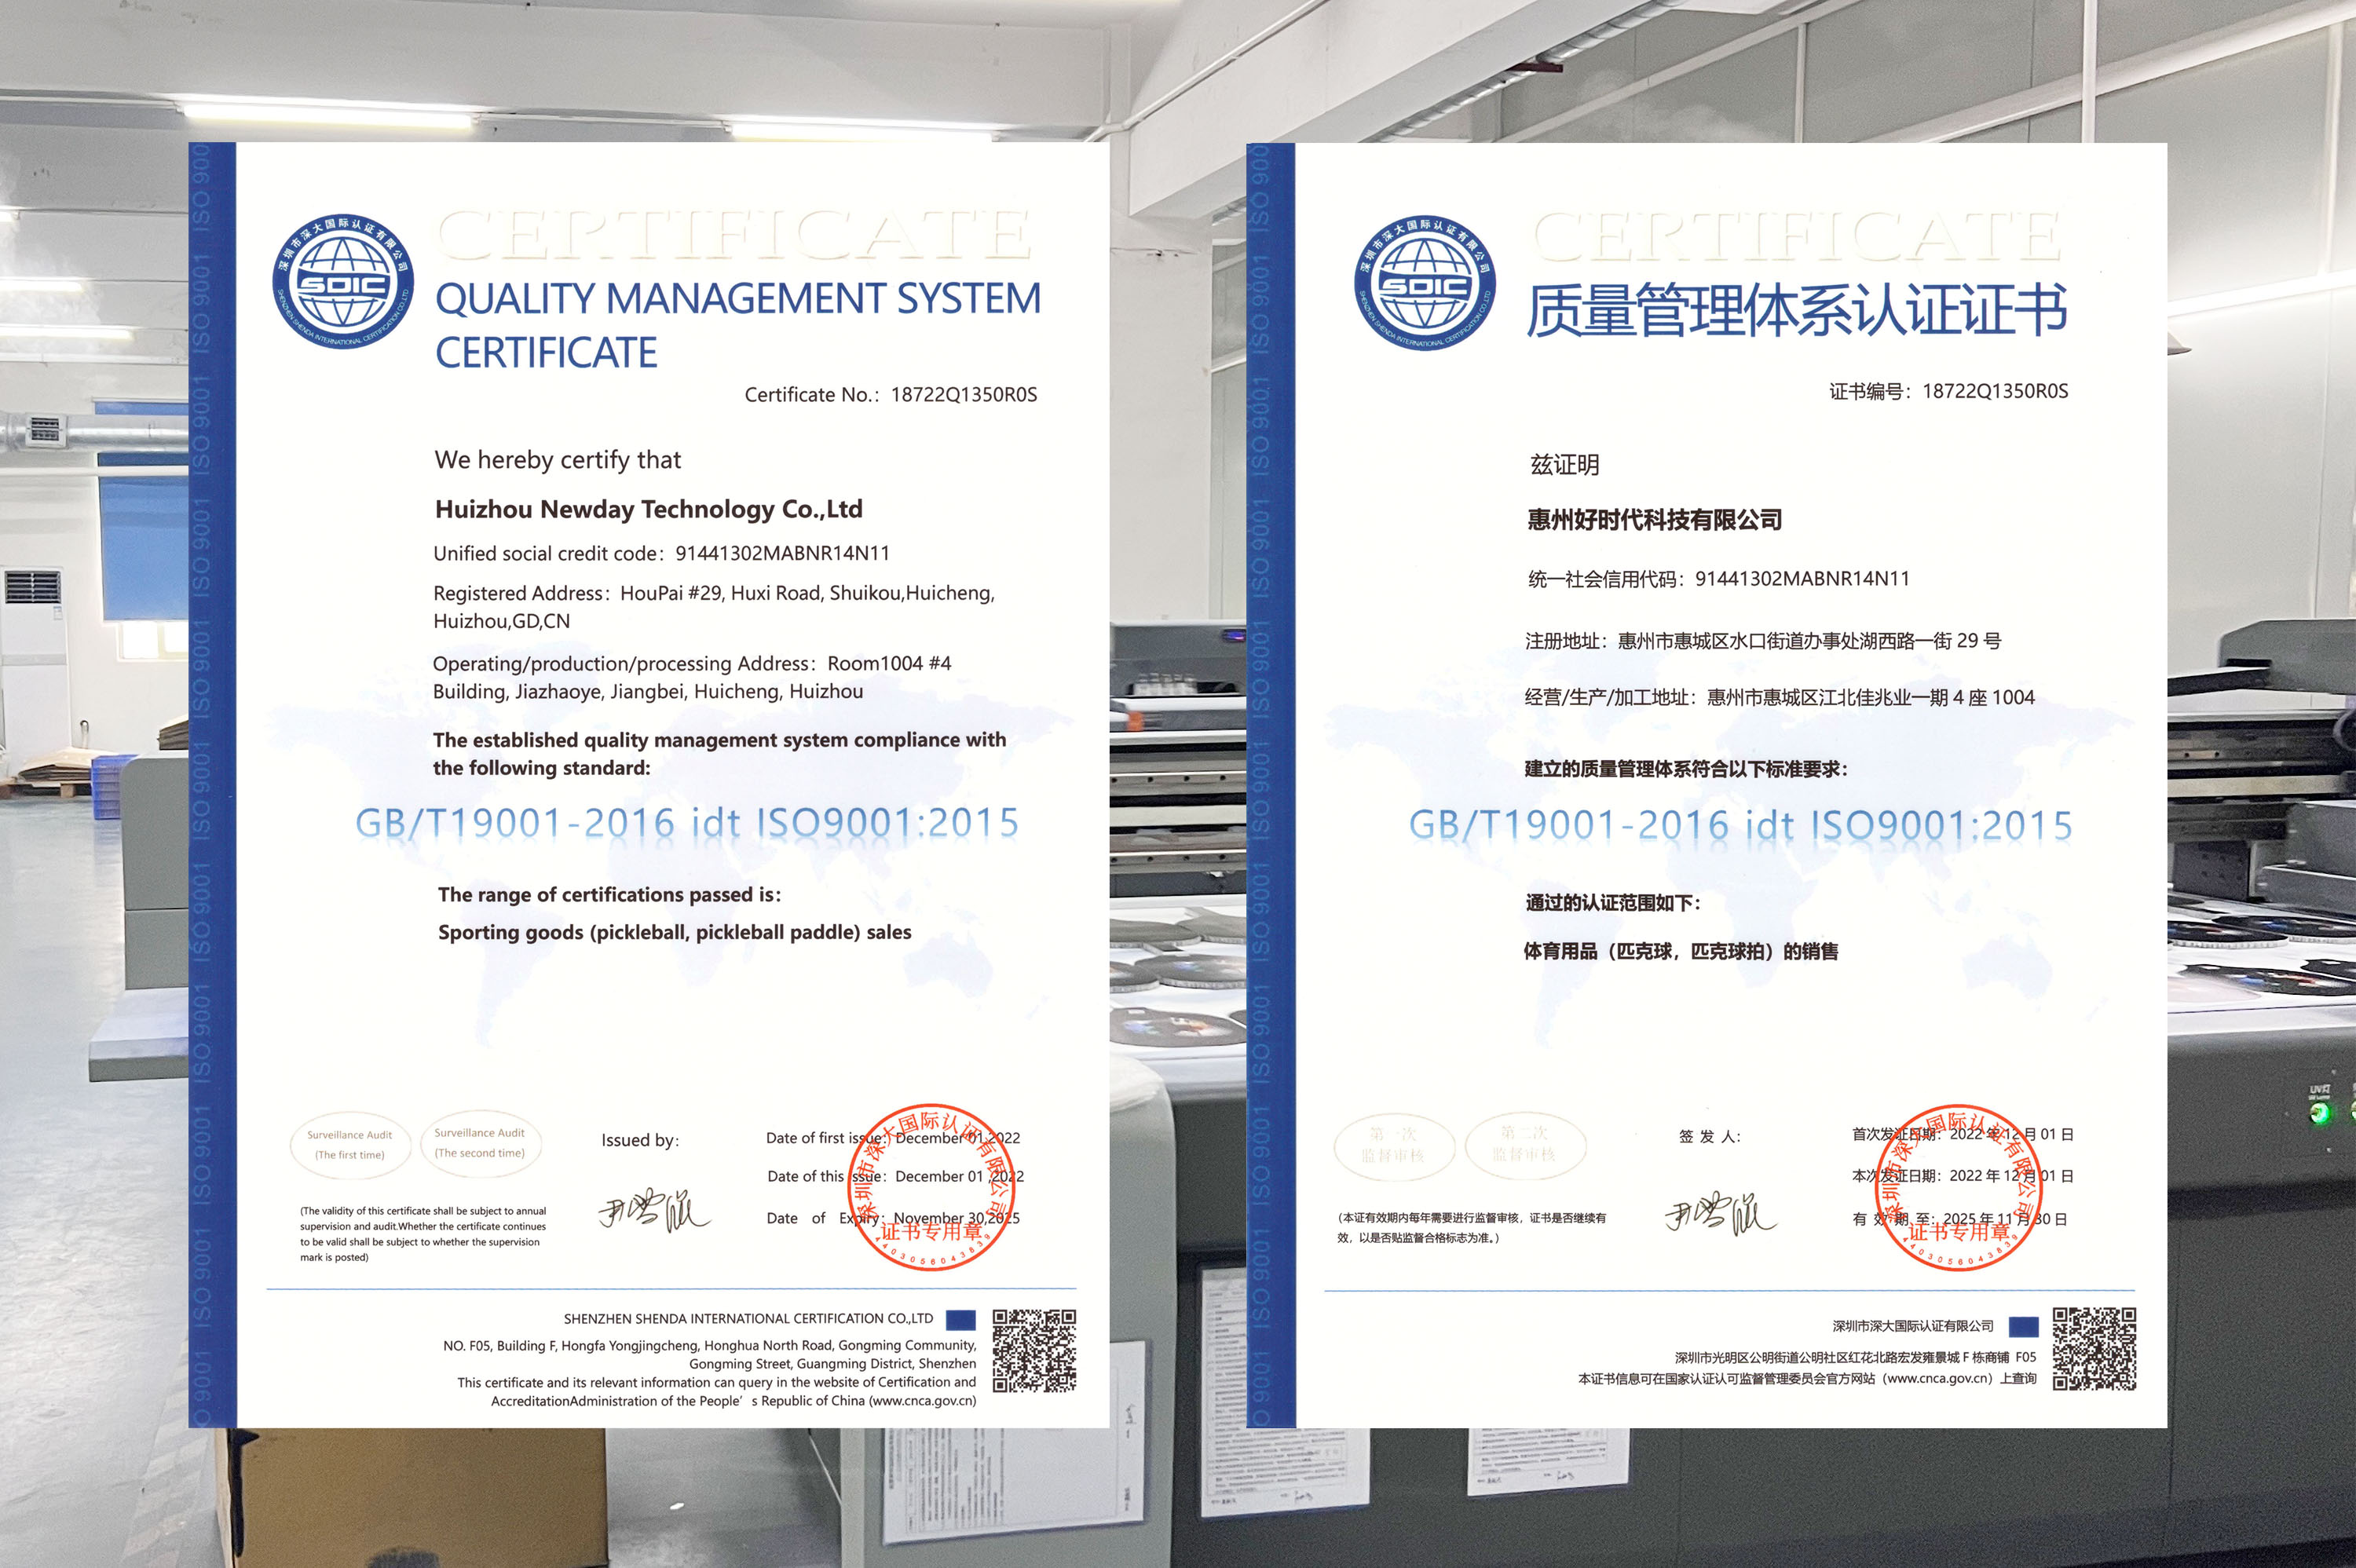 ISO9001-Zertifikat, wir haben es!